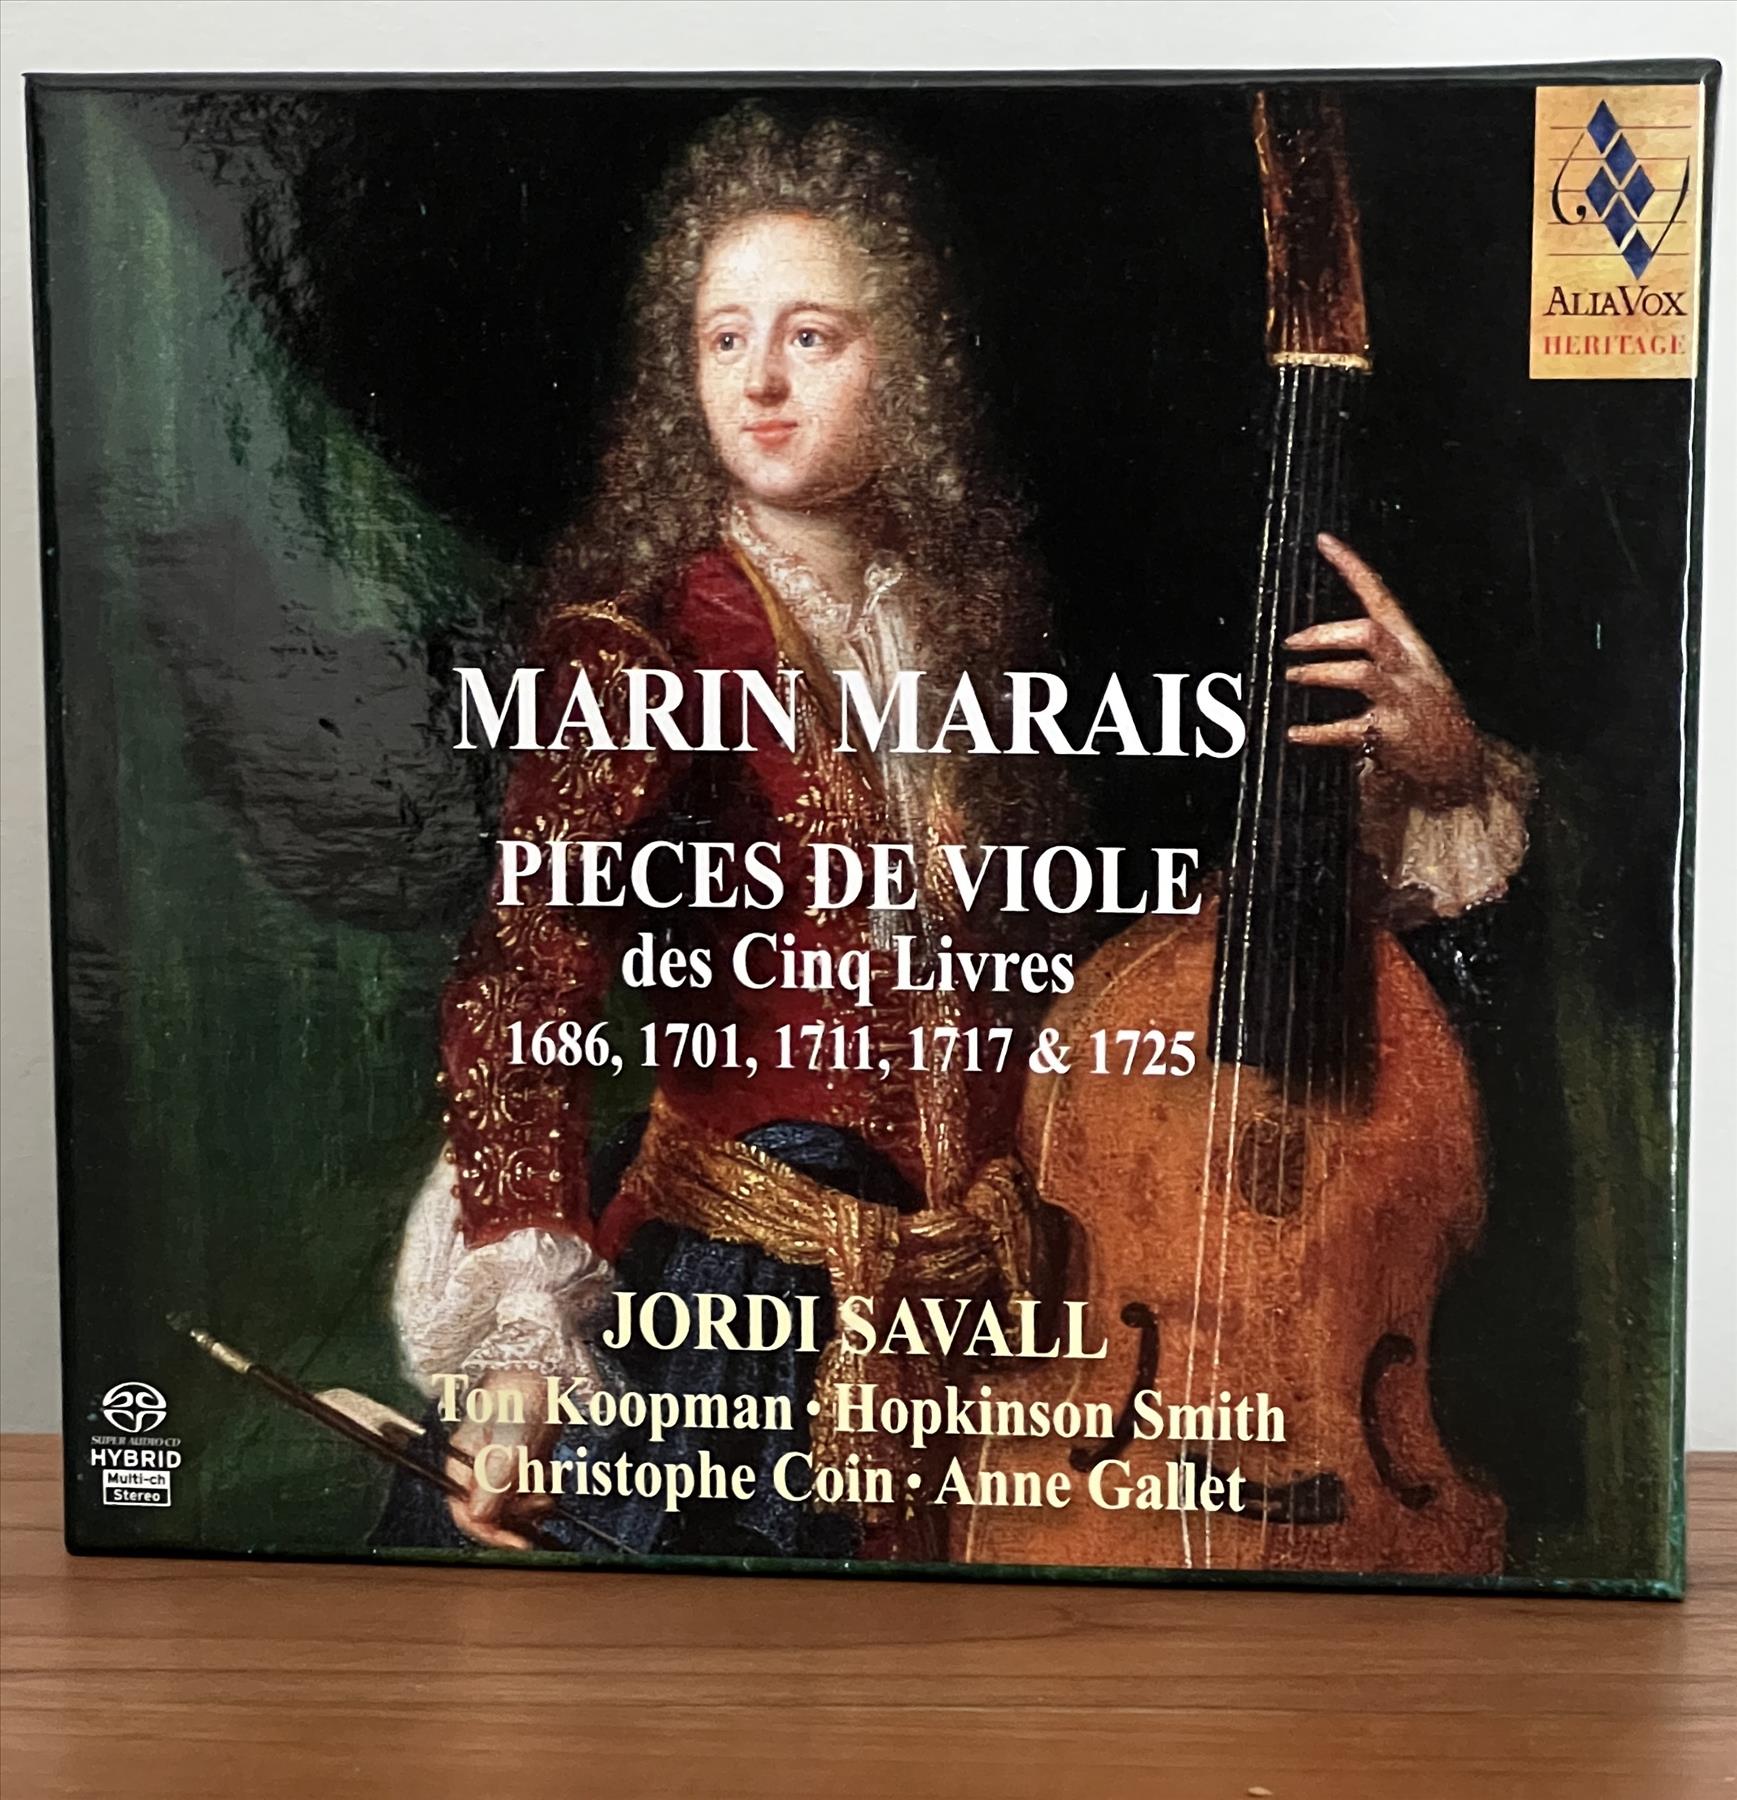 Sublime viola da gamba music of Marin Marais played by Jordi Savall